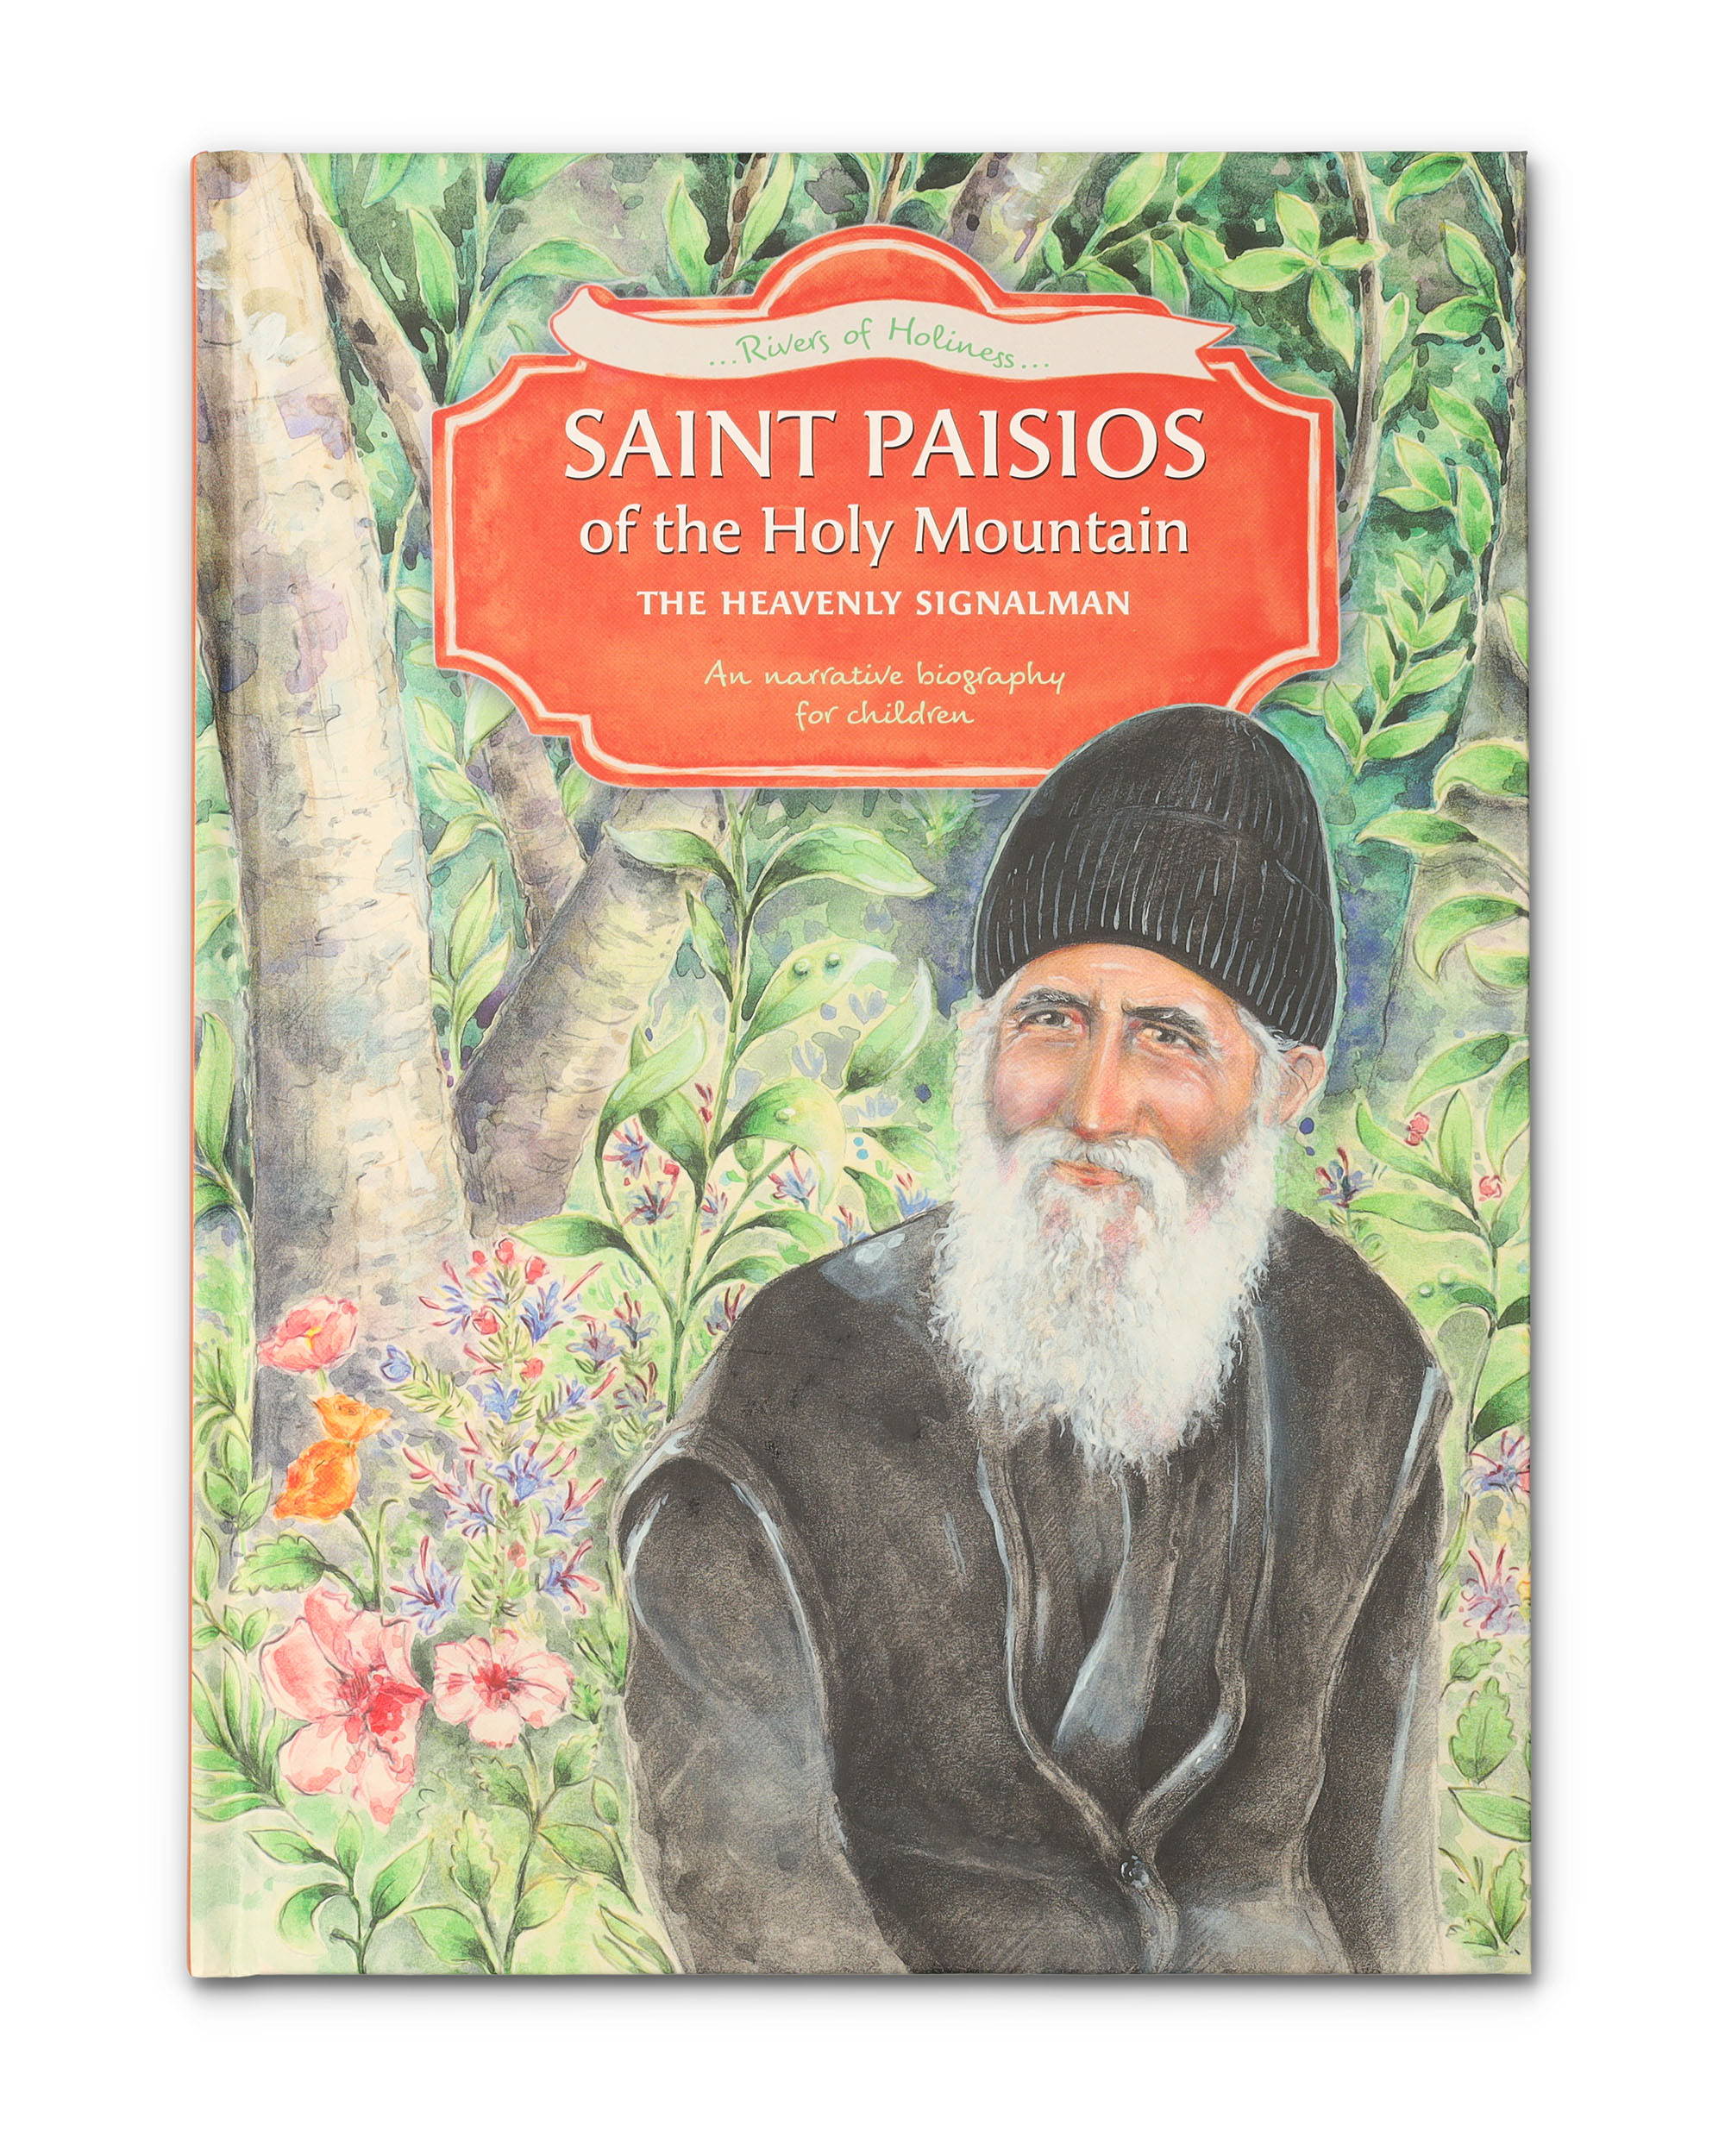 Saint Paisios the Heavenly Signalman